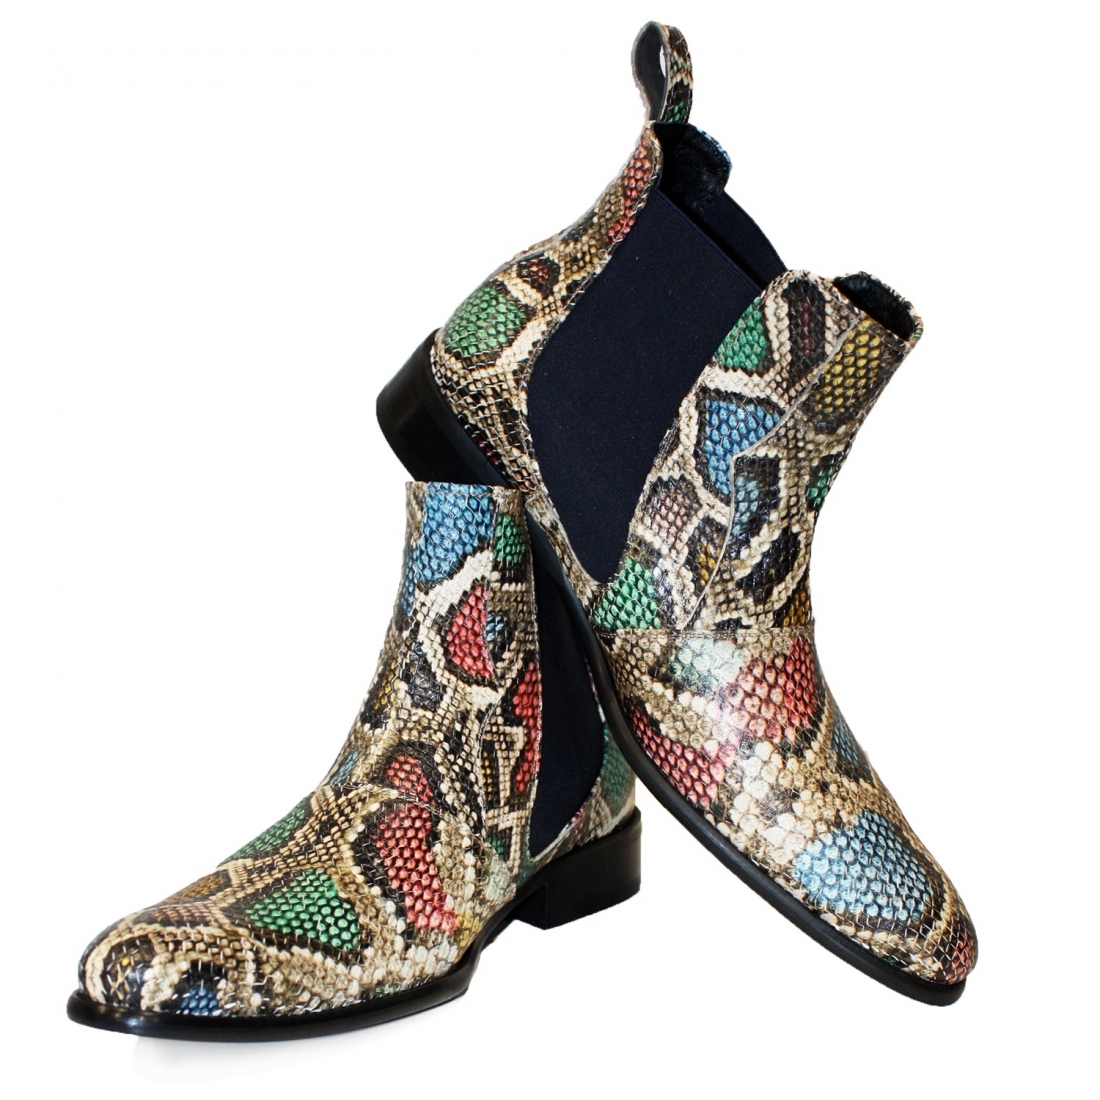 Modello Rena - Chelsea Boots - Handmade Colorful Italian Leather Shoes